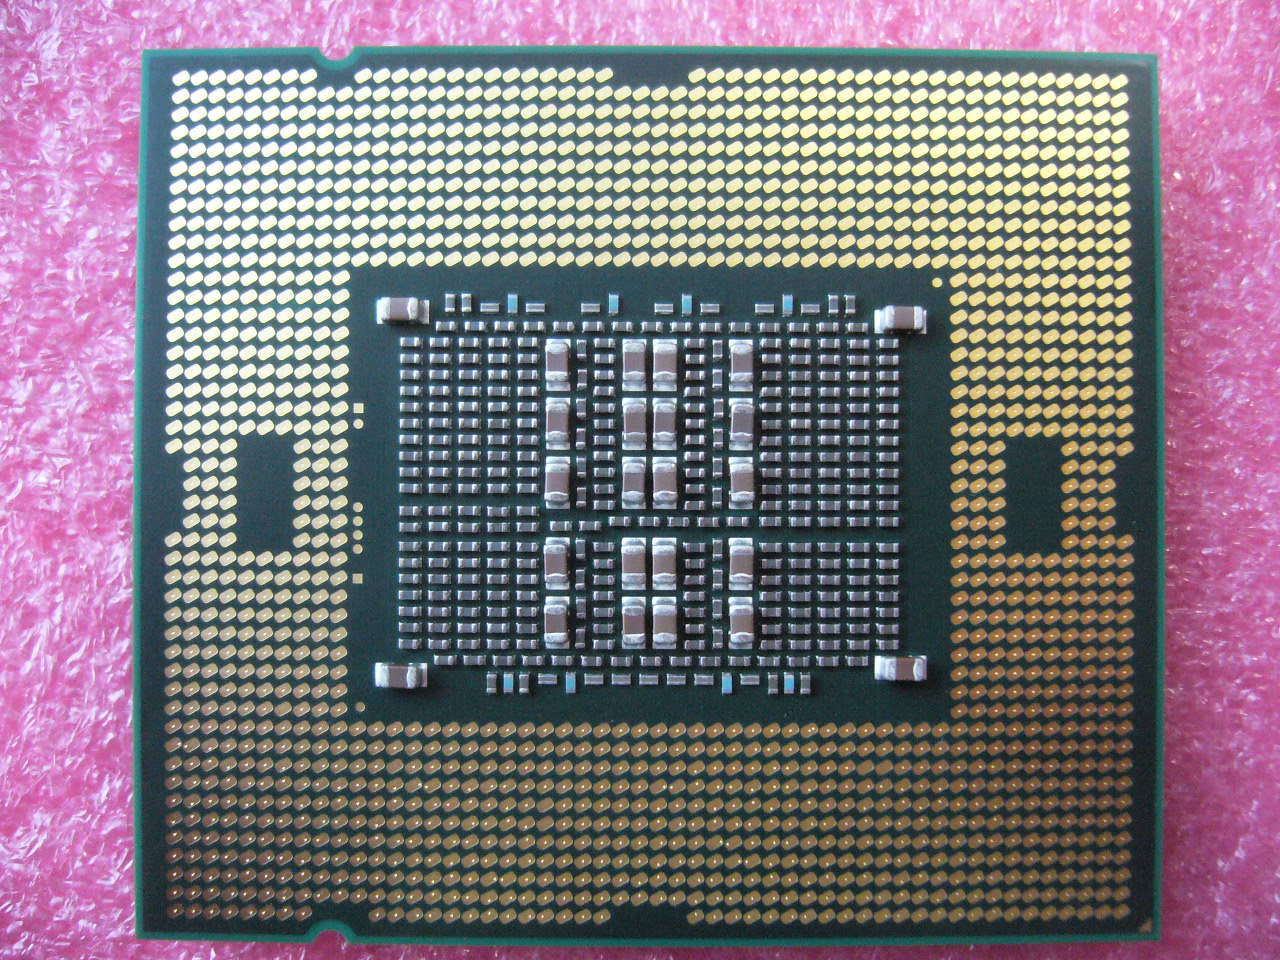 QTY 1x INTEL Ten-Cores ES CPU E7-8870 2.4GHZ/30MB LGA1567 Q4ZK A1 - Click Image to Close